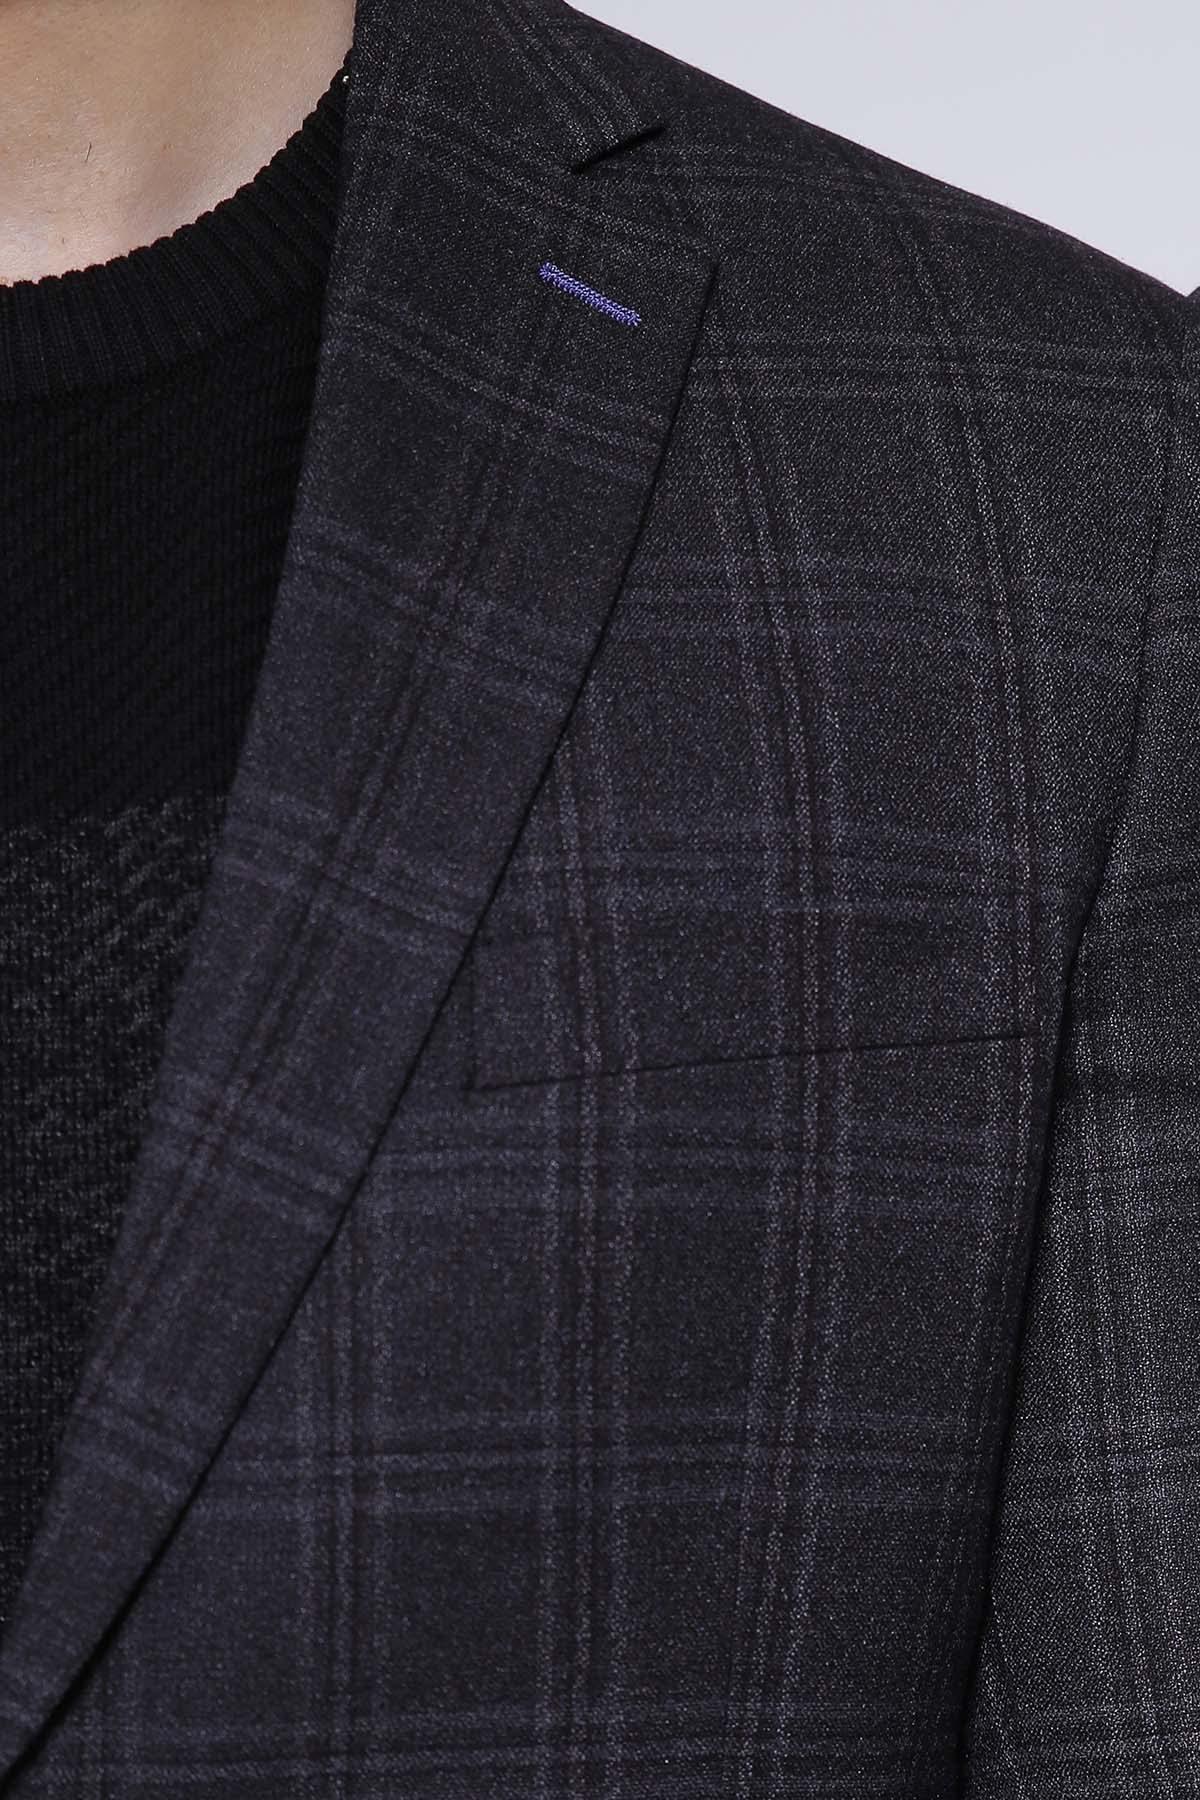 CASUAL COAT SLIM FIT BLACK GREY at Charcoal Clothing